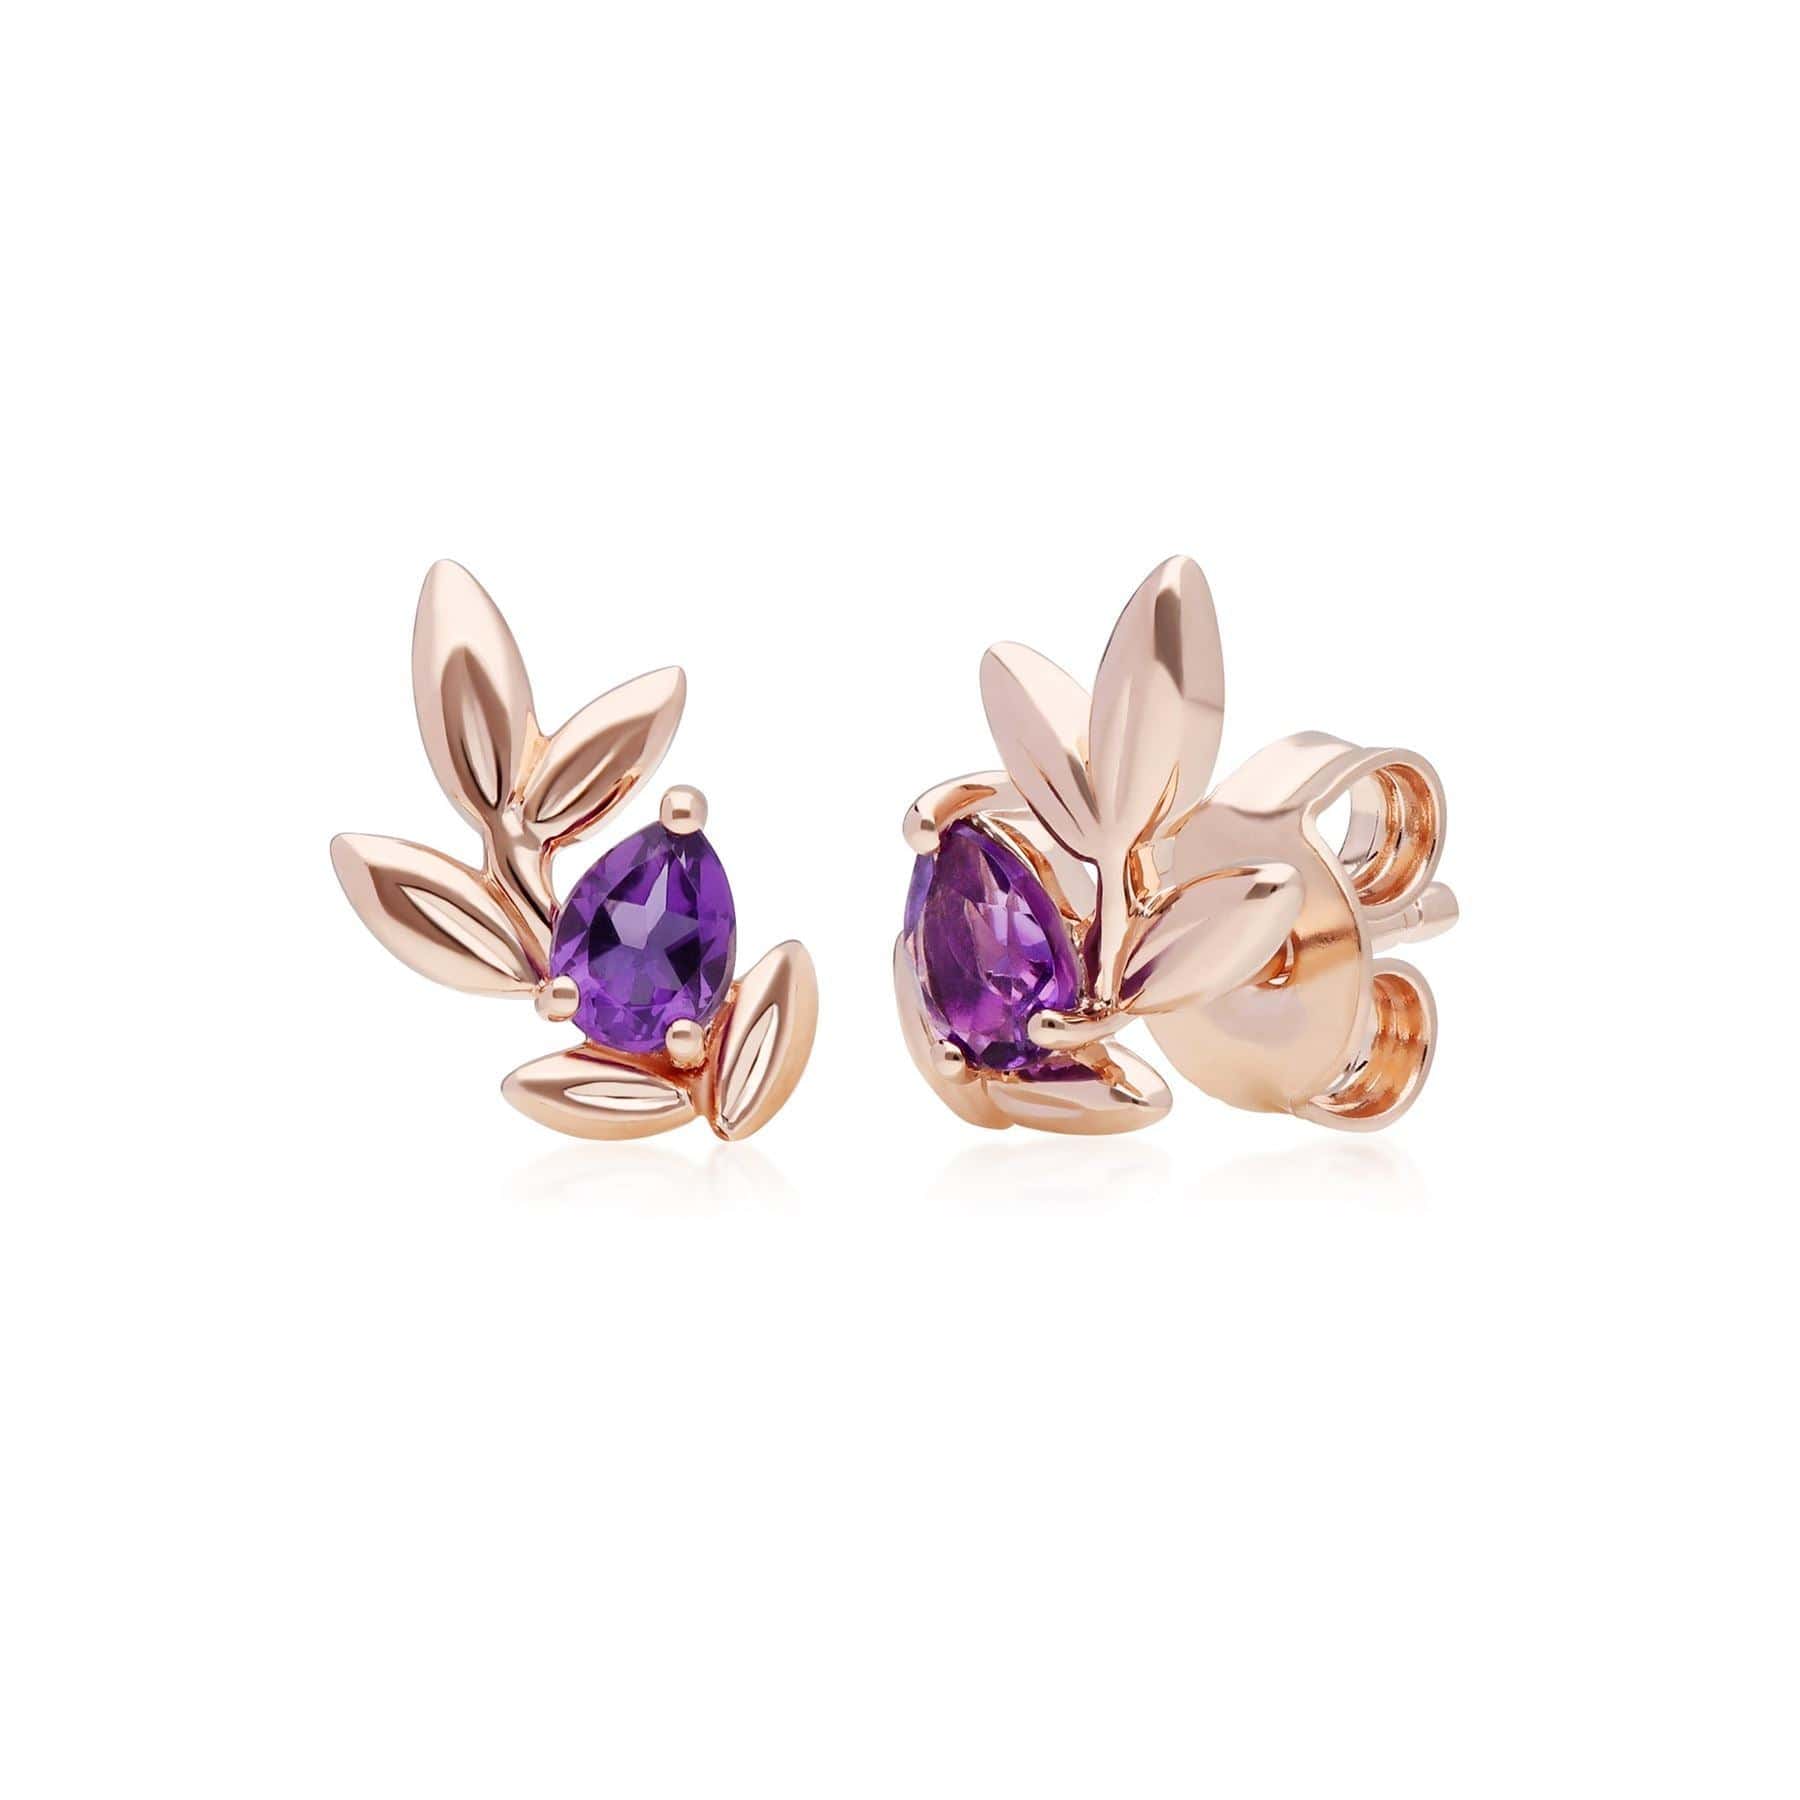 O Leaf Amethyst Necklace & Stud Earring Set in 9ct Rose Gold - Gemondo